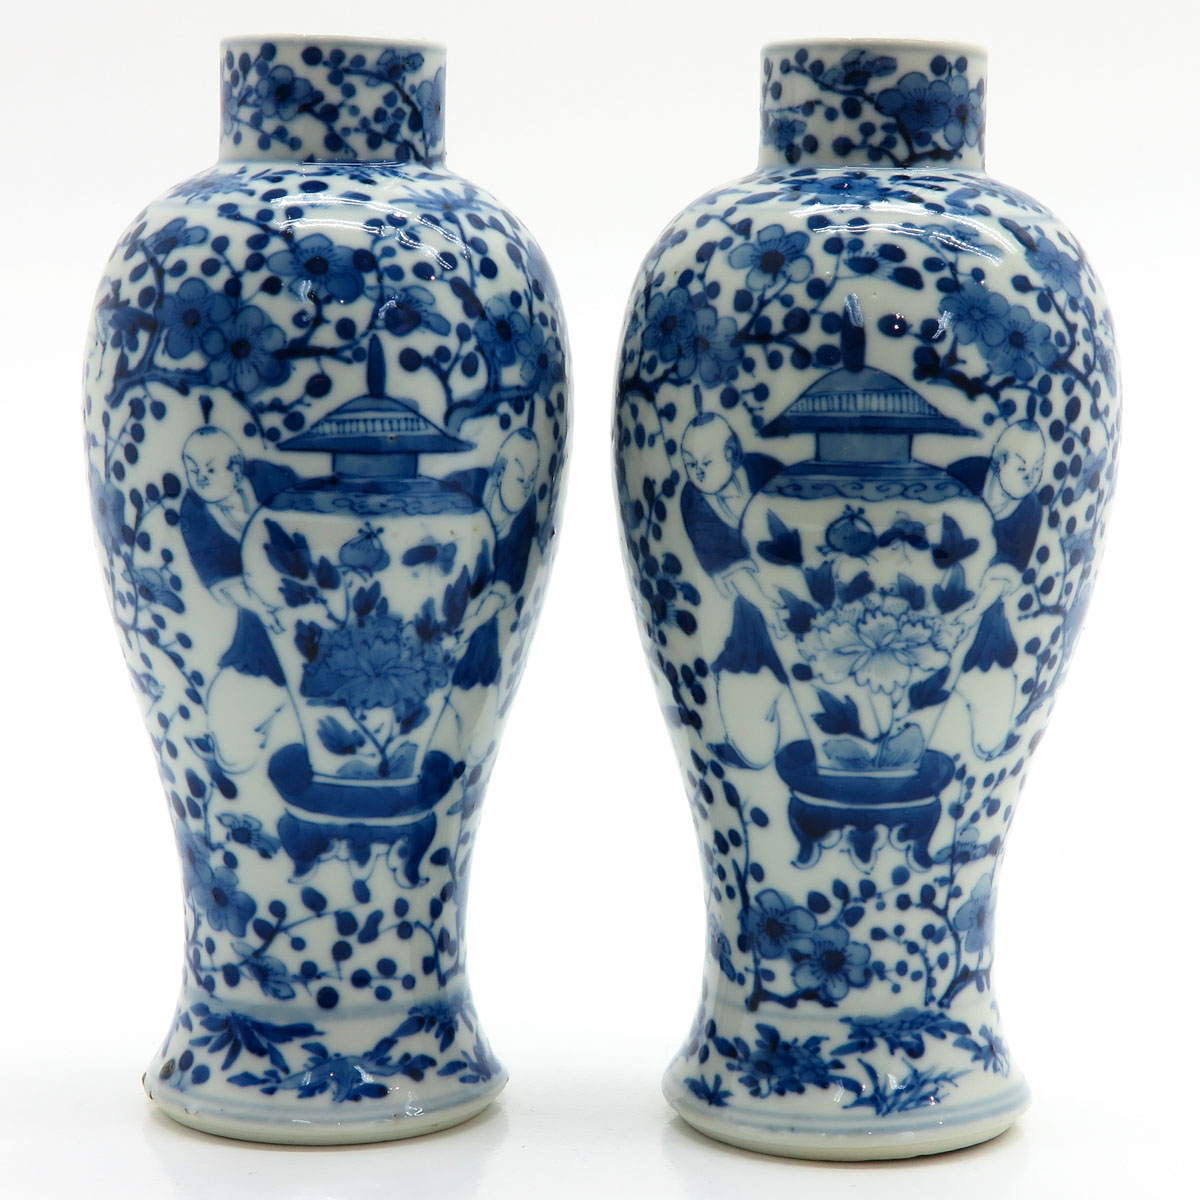 Lot of 2 China Porcelain Vases